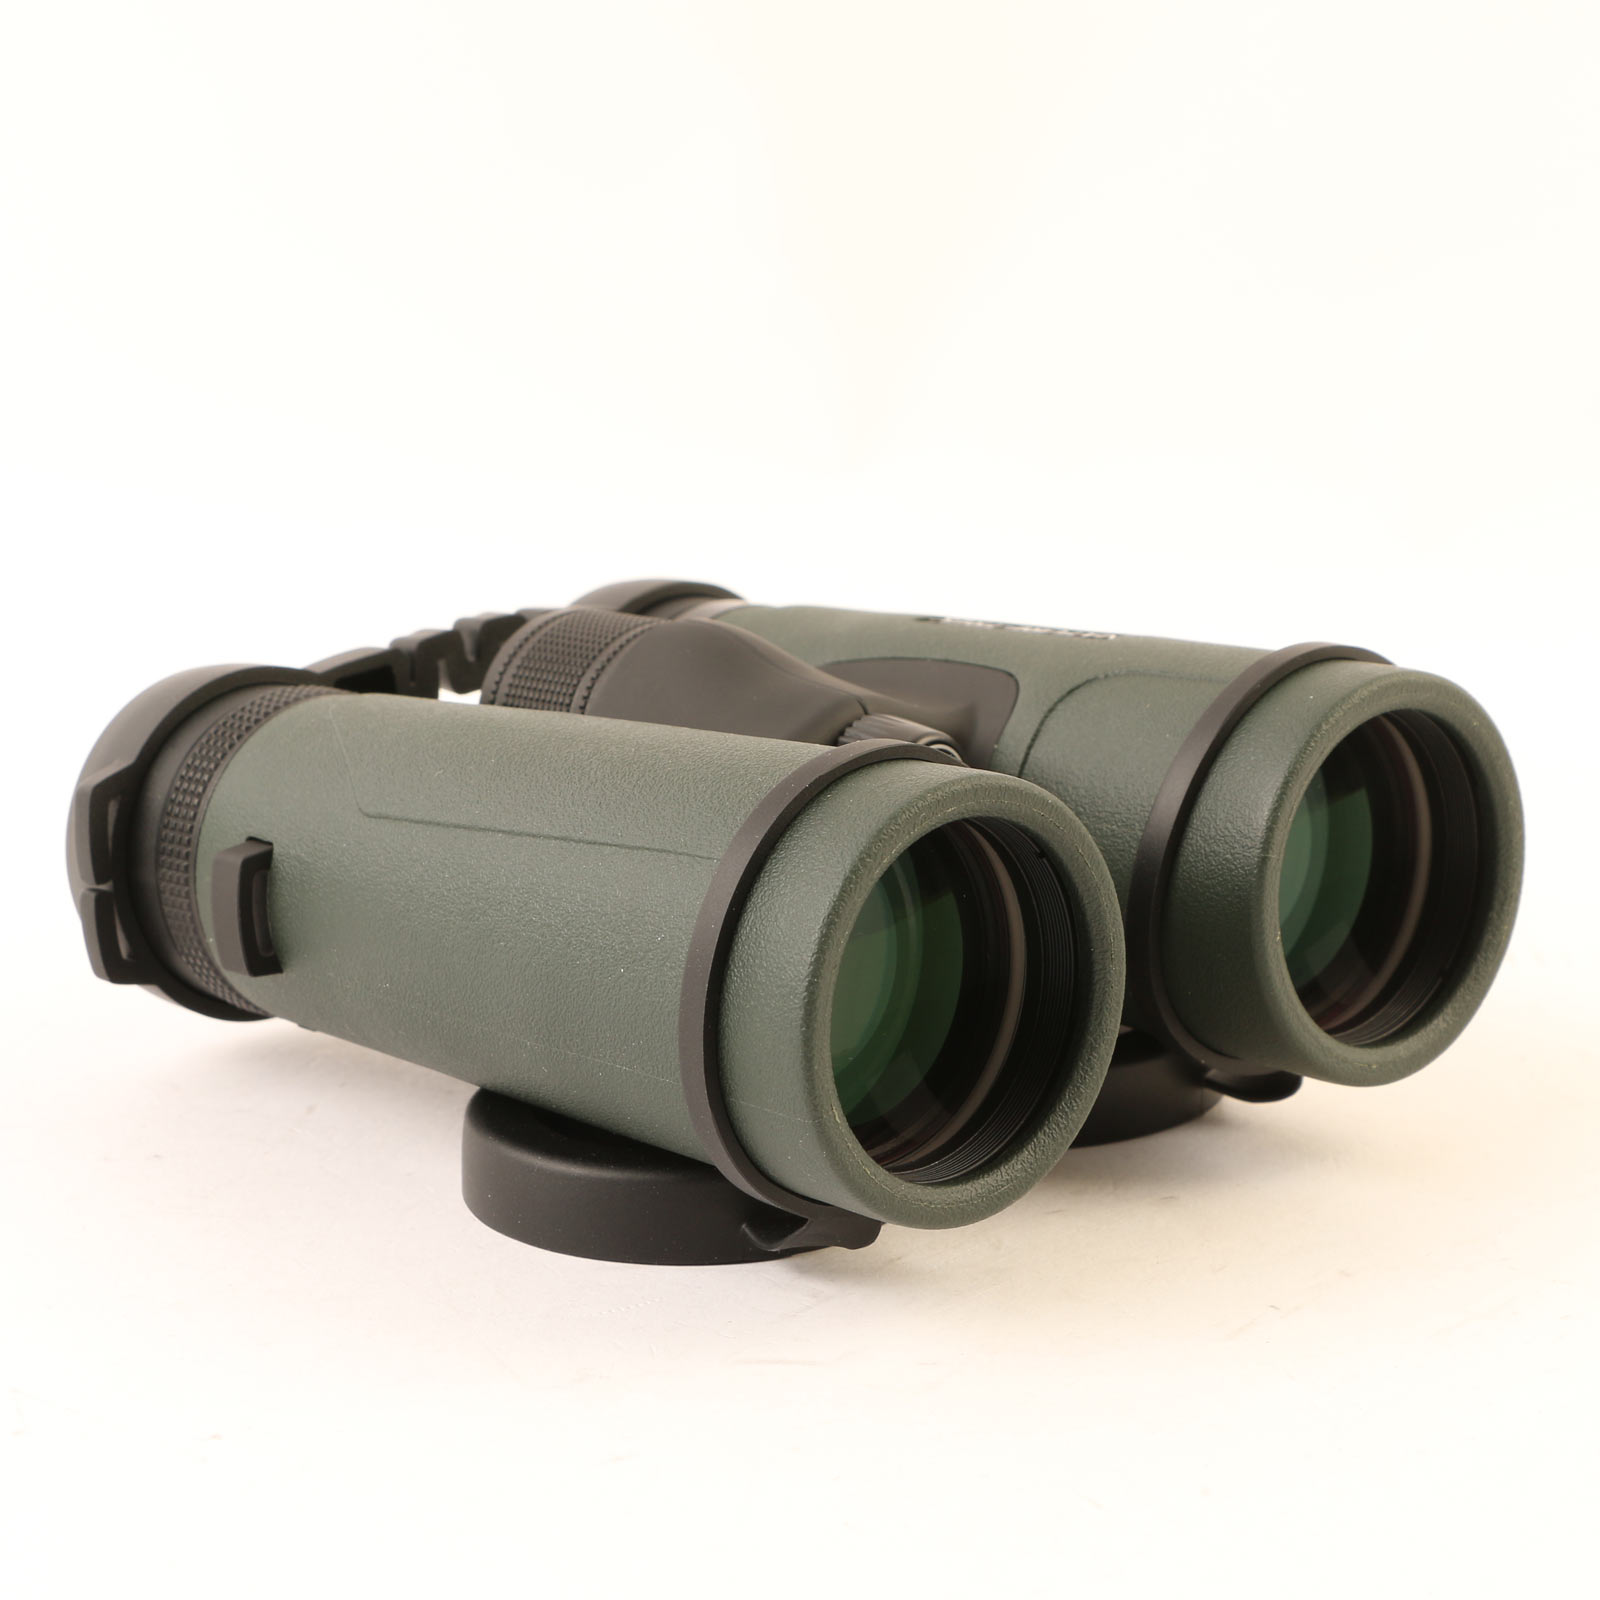 USED Hawke Nature-Trek 10x42 Binoculars